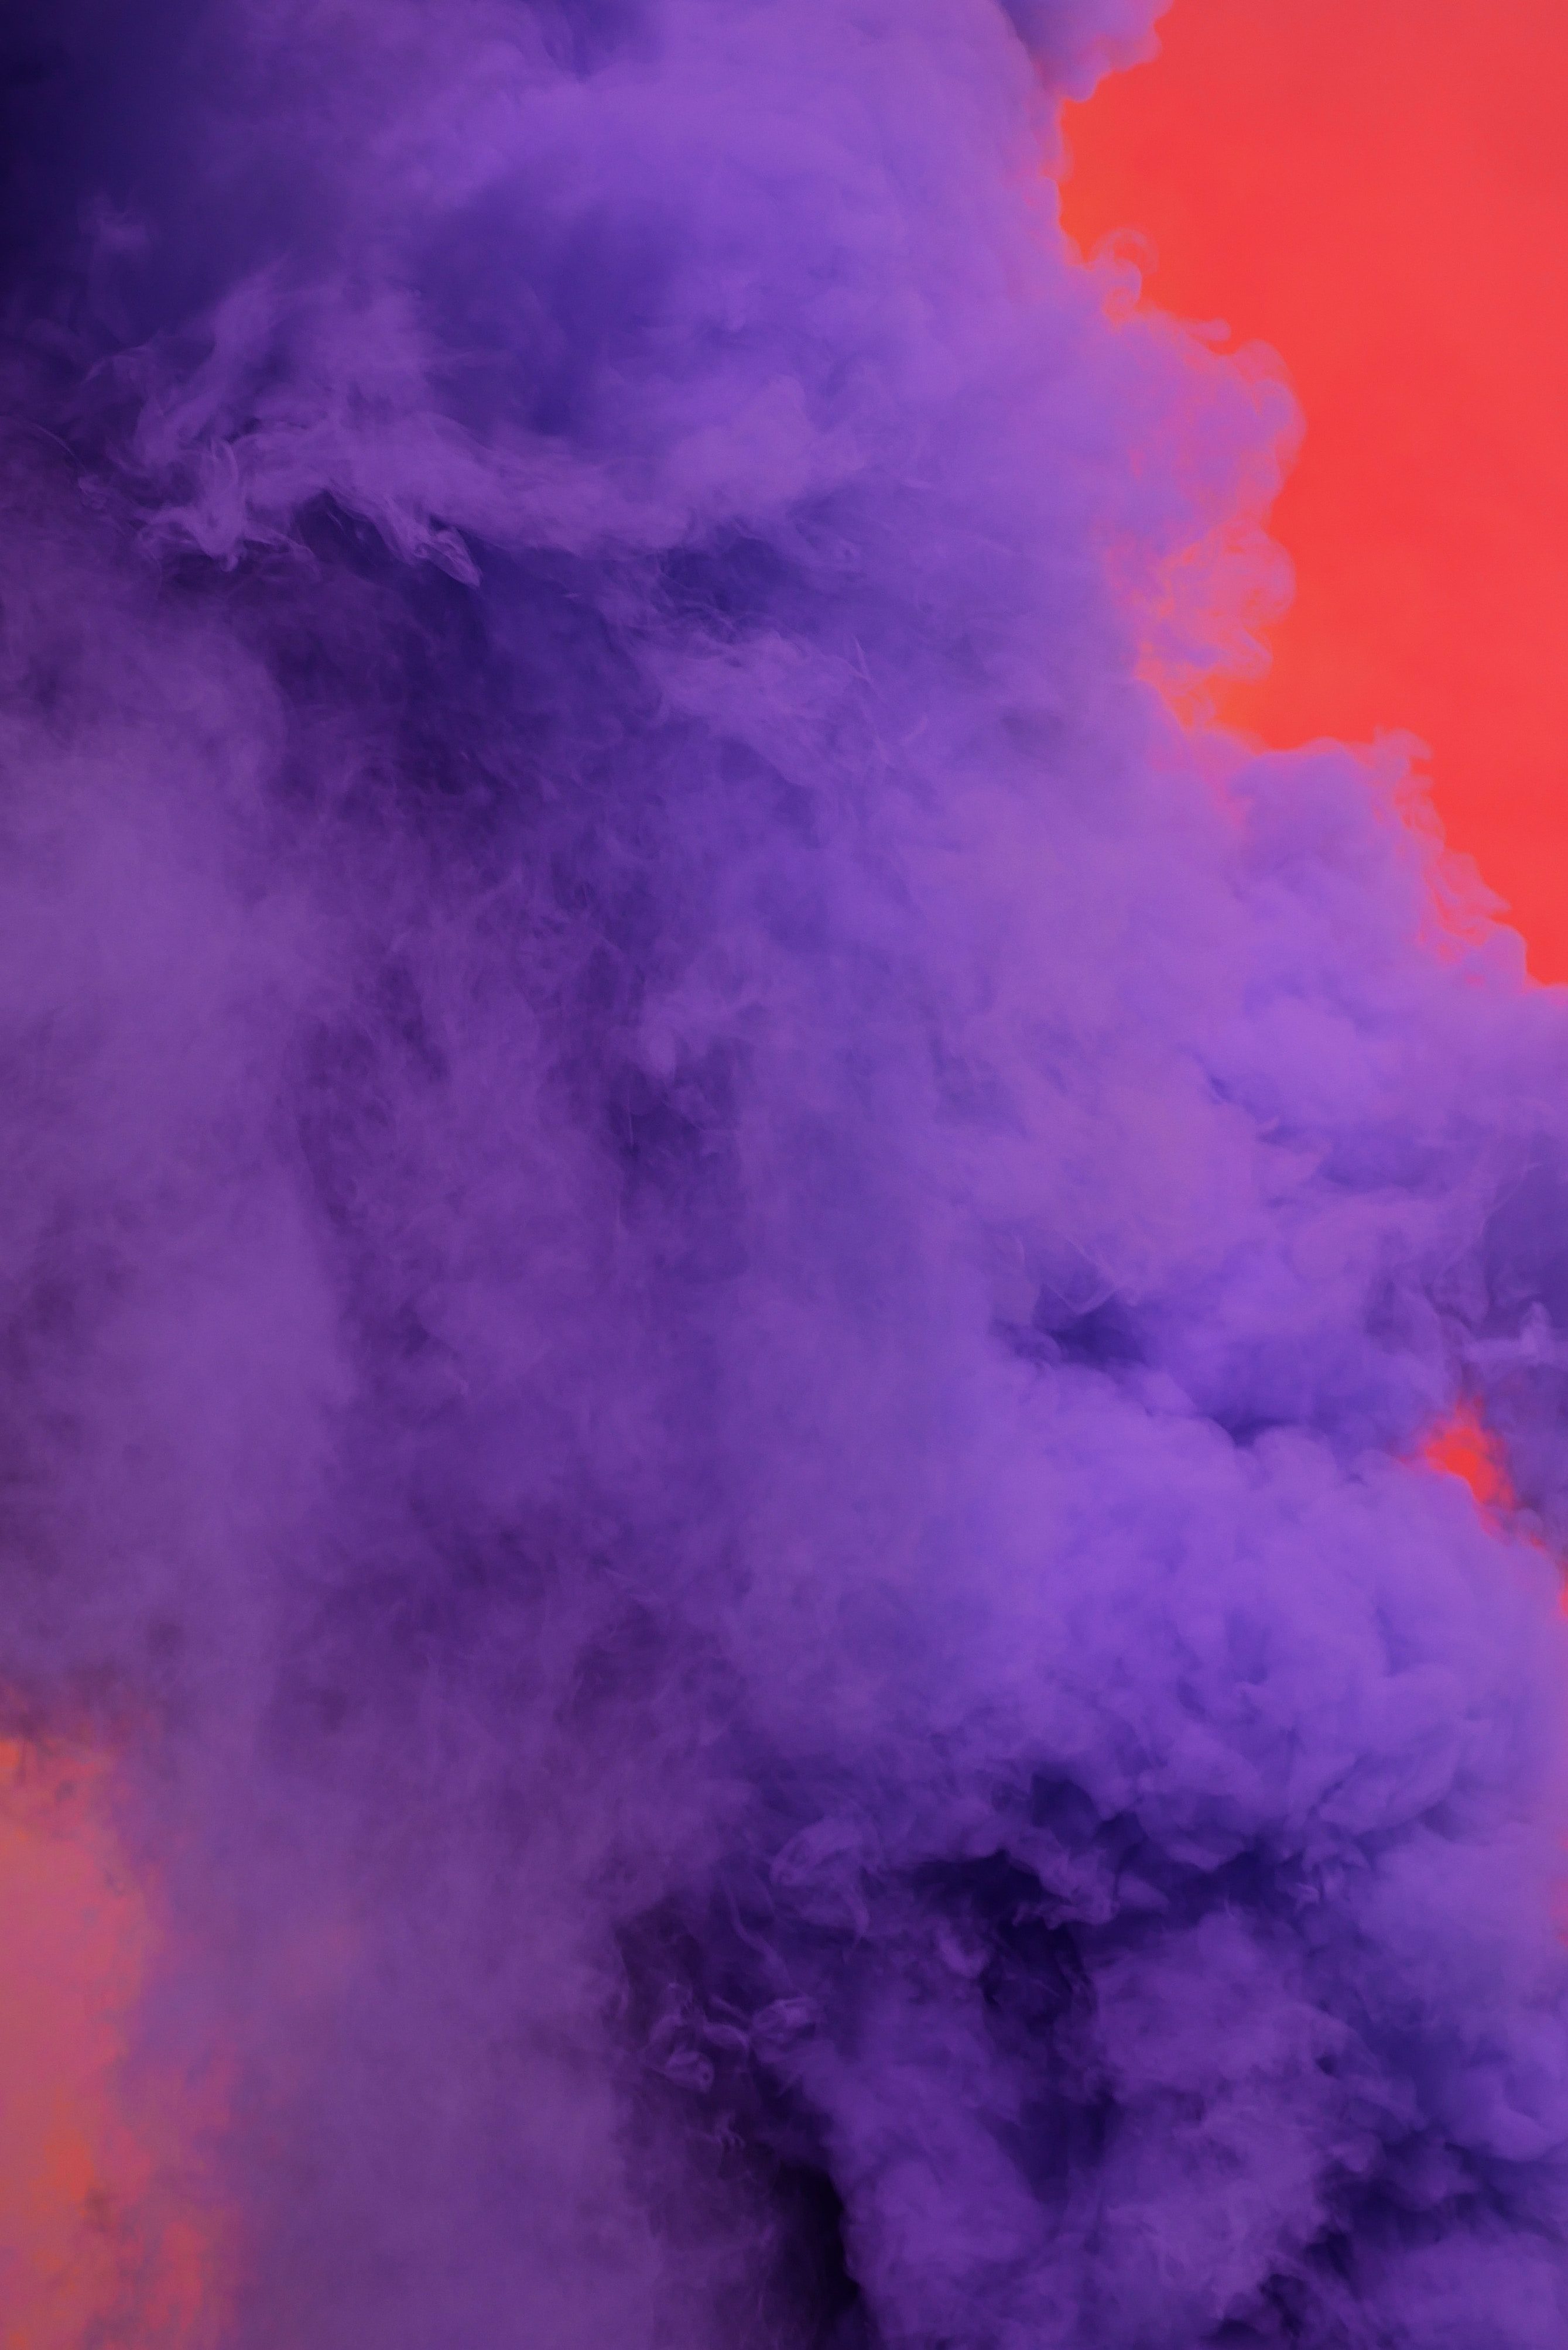 Red And Purple Smoke iPhone Wallpaper  iDrop News